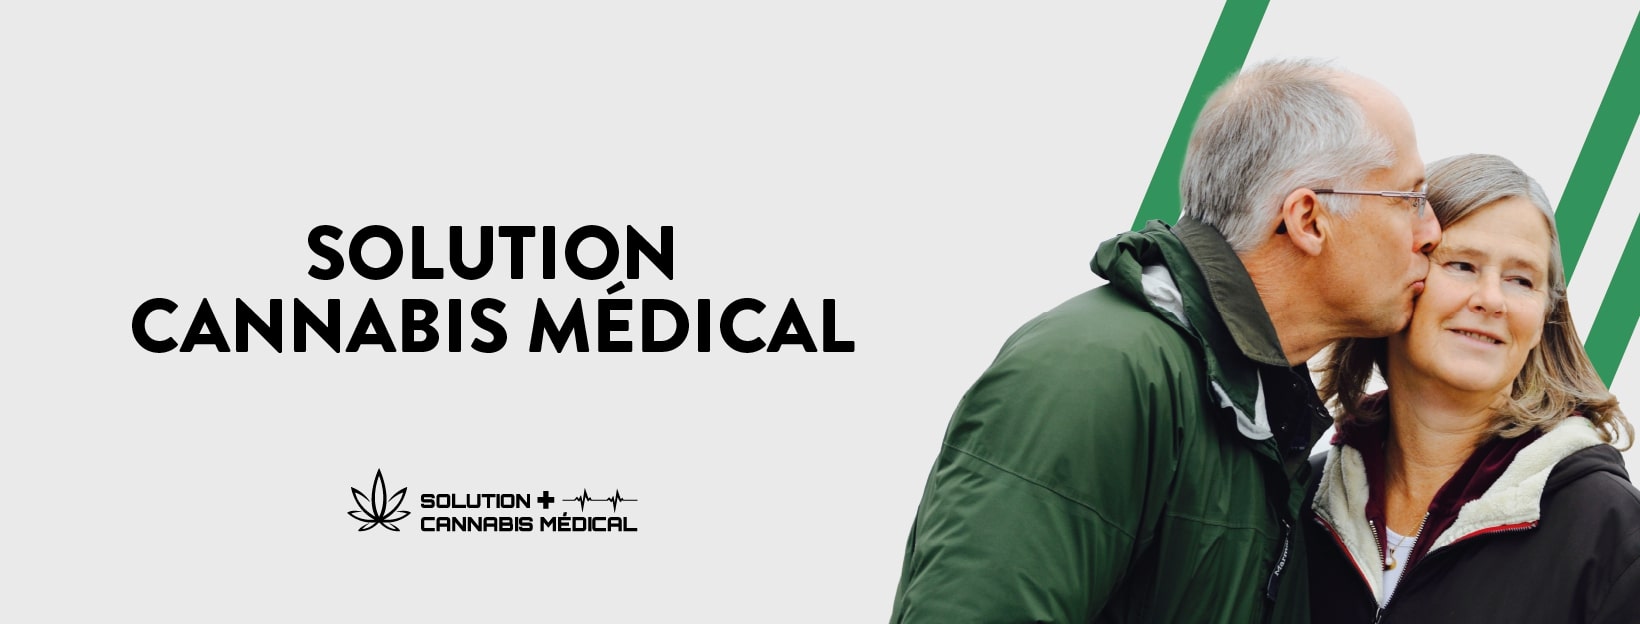 Solution Cannabis Medical - logo